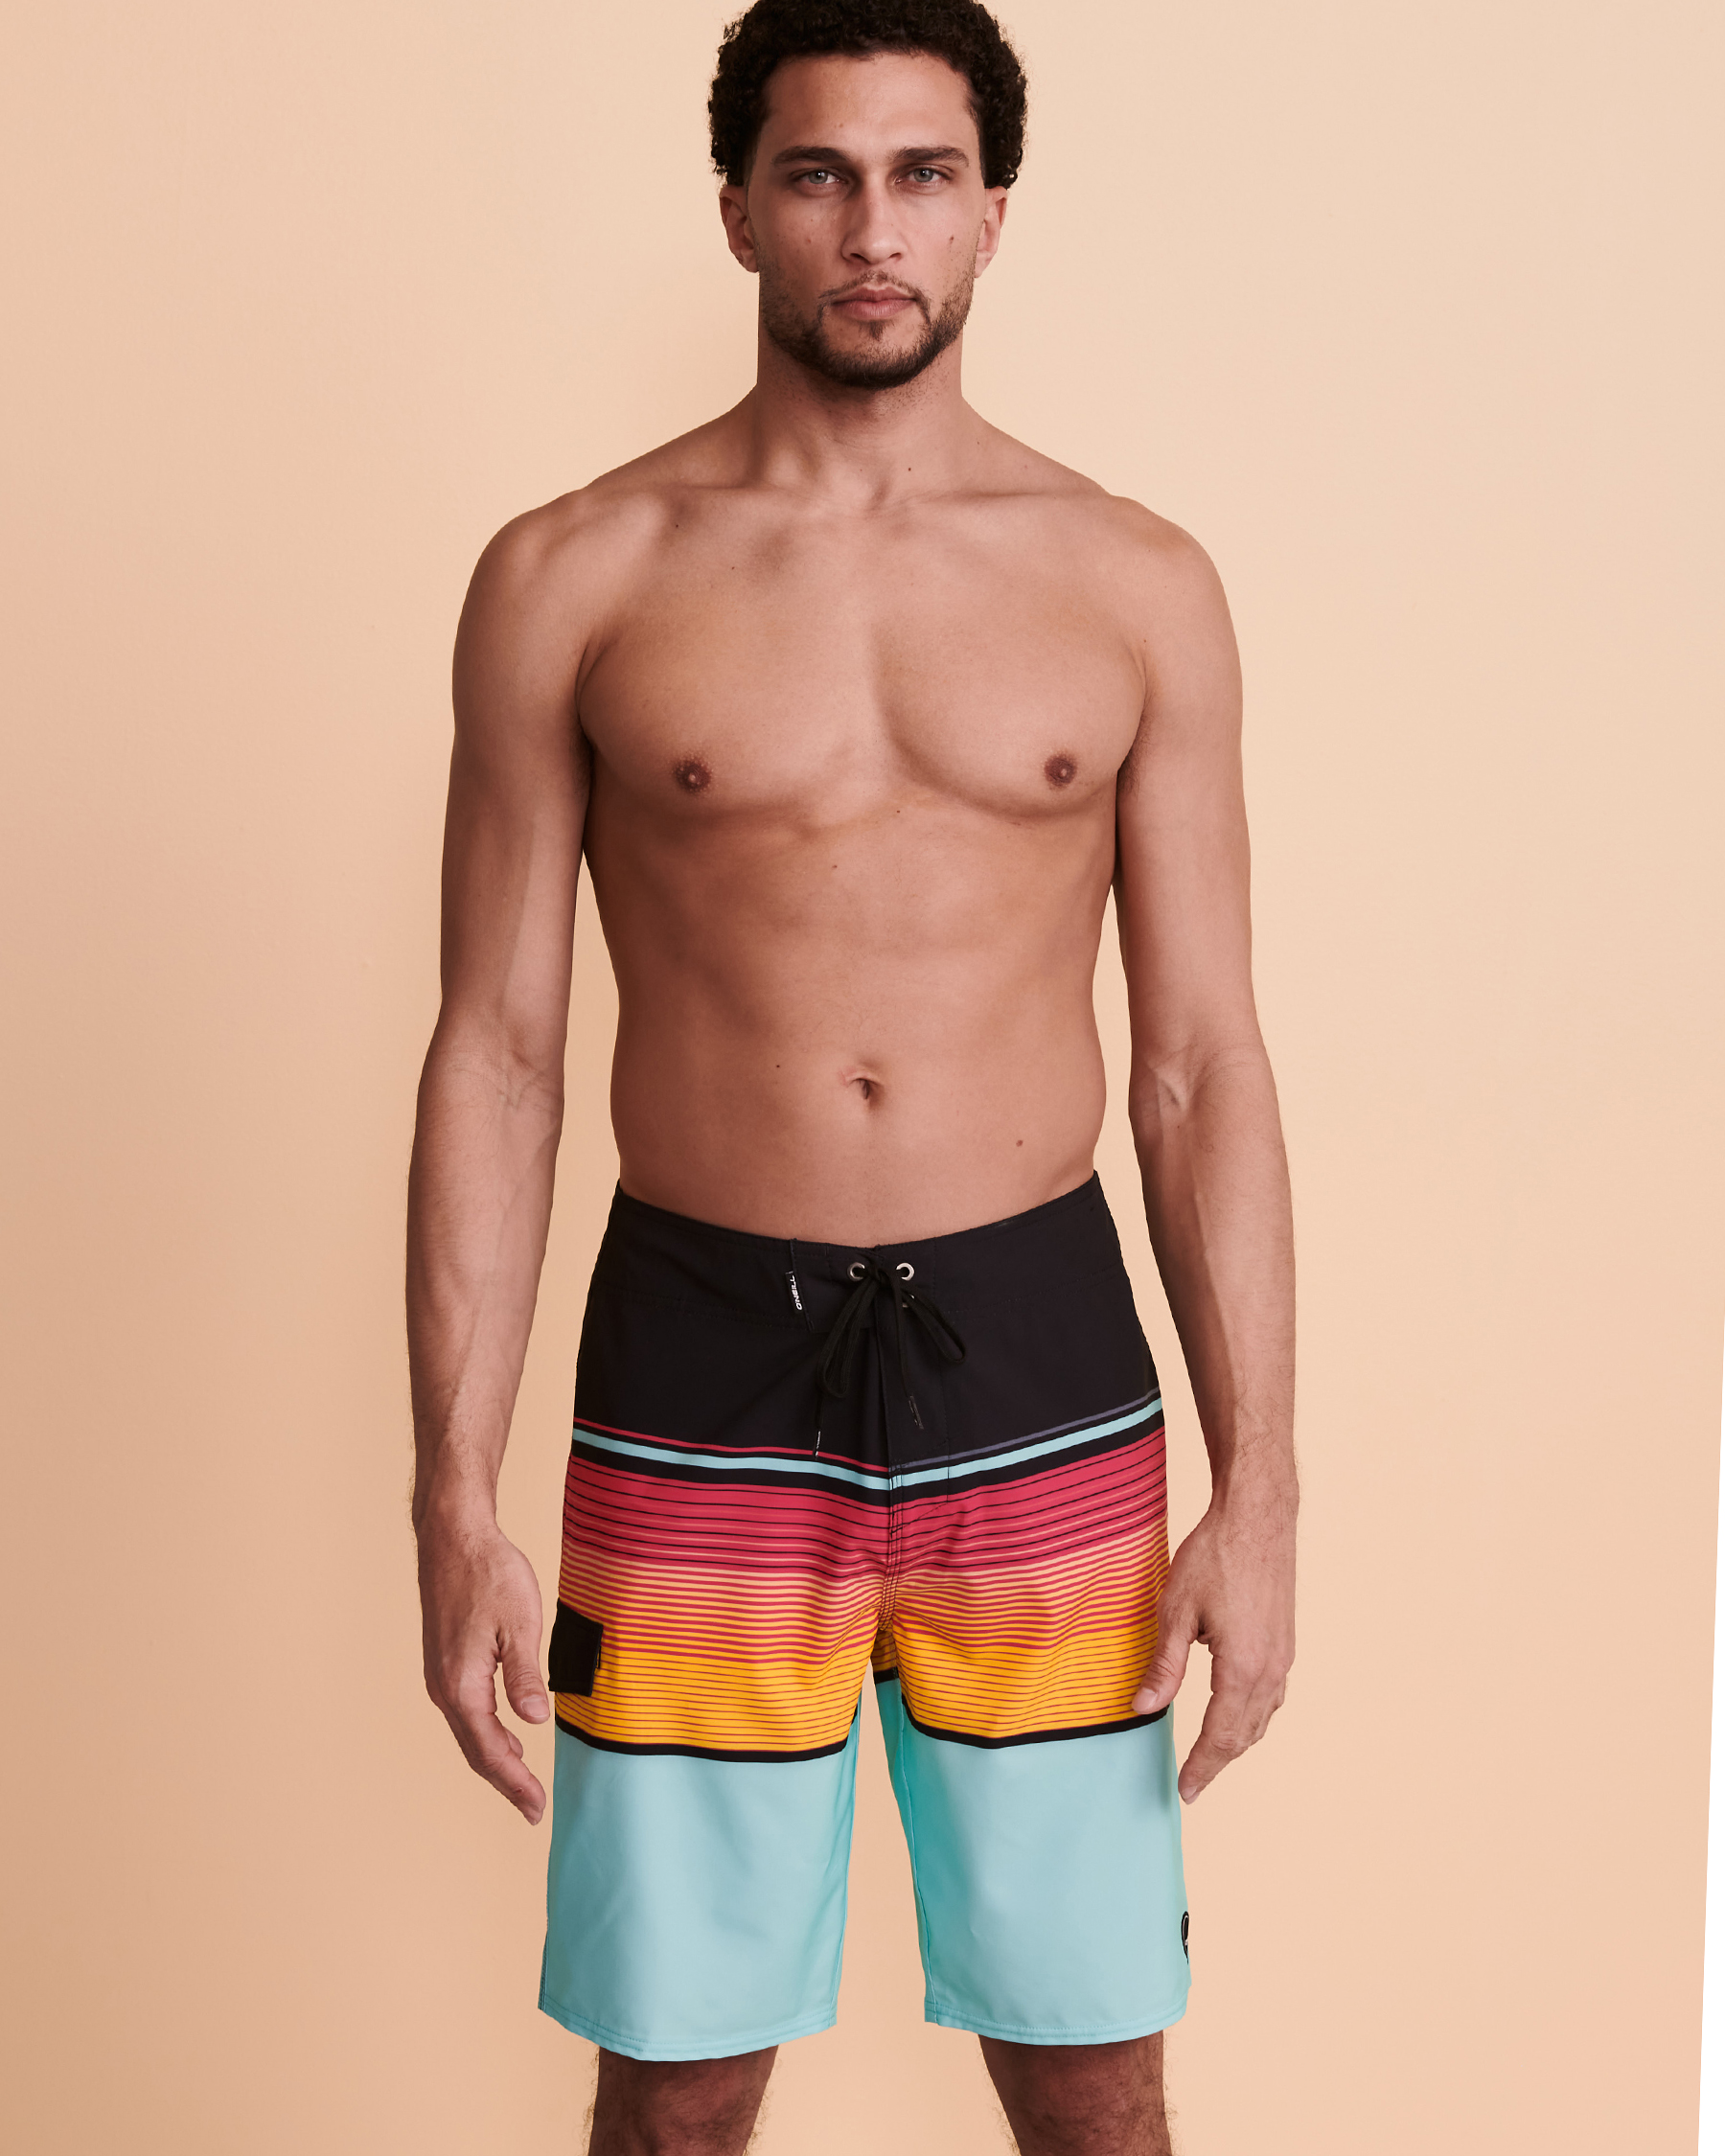 O'NEILL LENNOX STRETCH Boardshort Swimsuit Multi stripes SP2106011 - View4